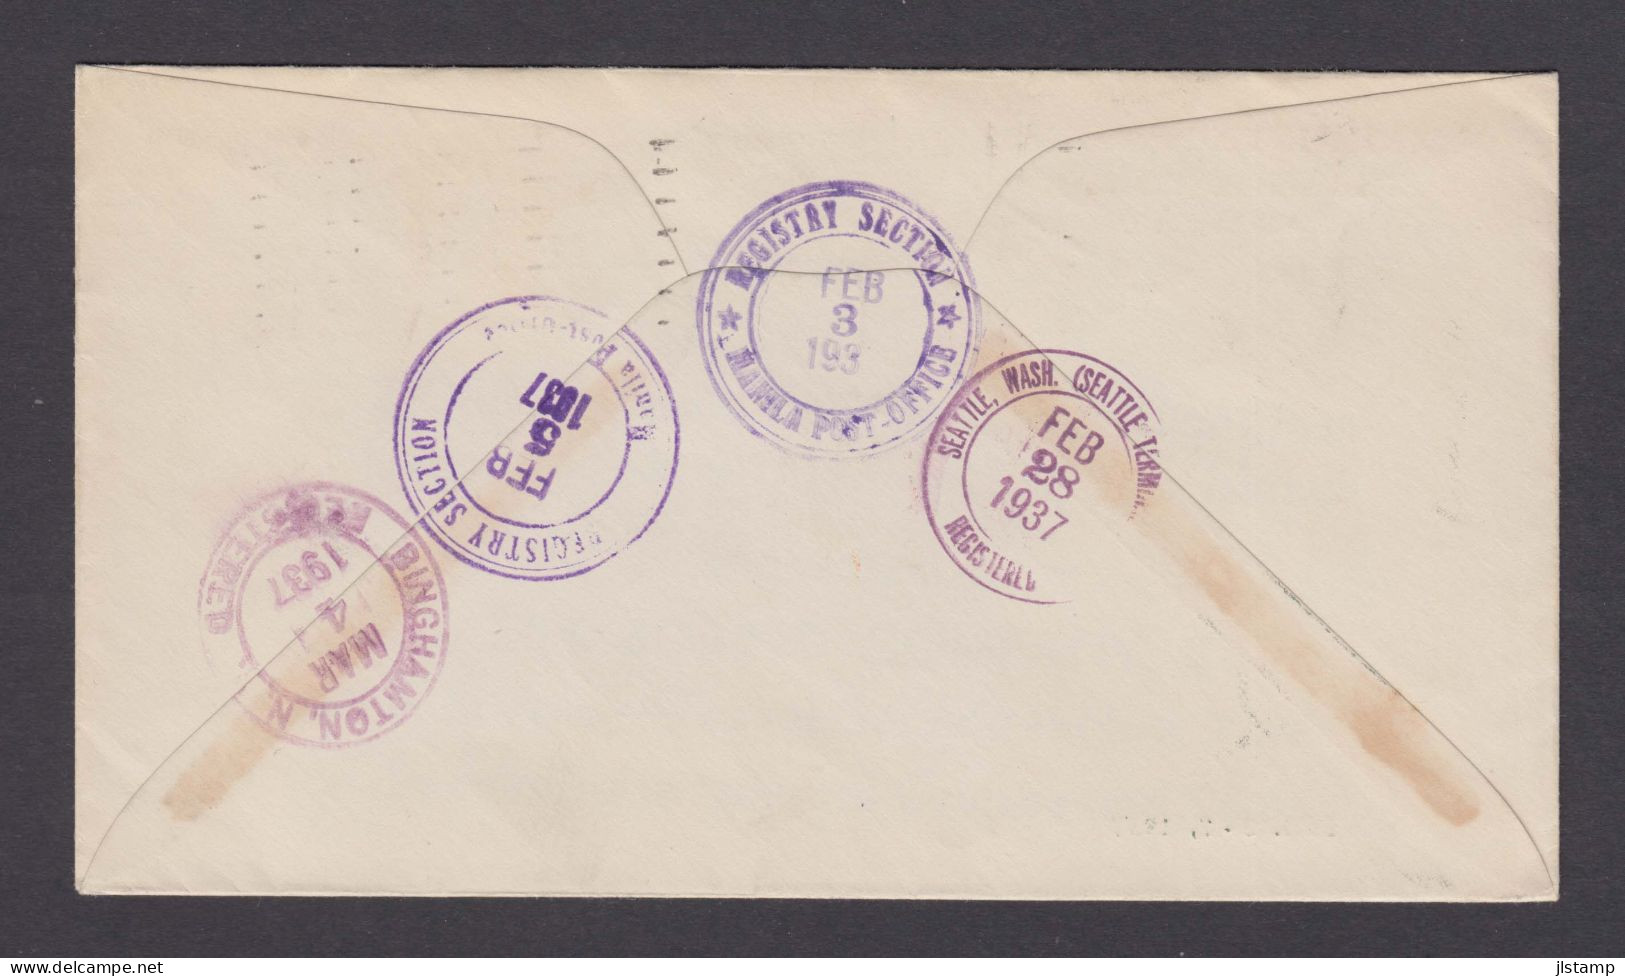 Philippines 1937 FDC Registered Used, Maps Stamps 6v,Scott# 425-430,VF - Filippine